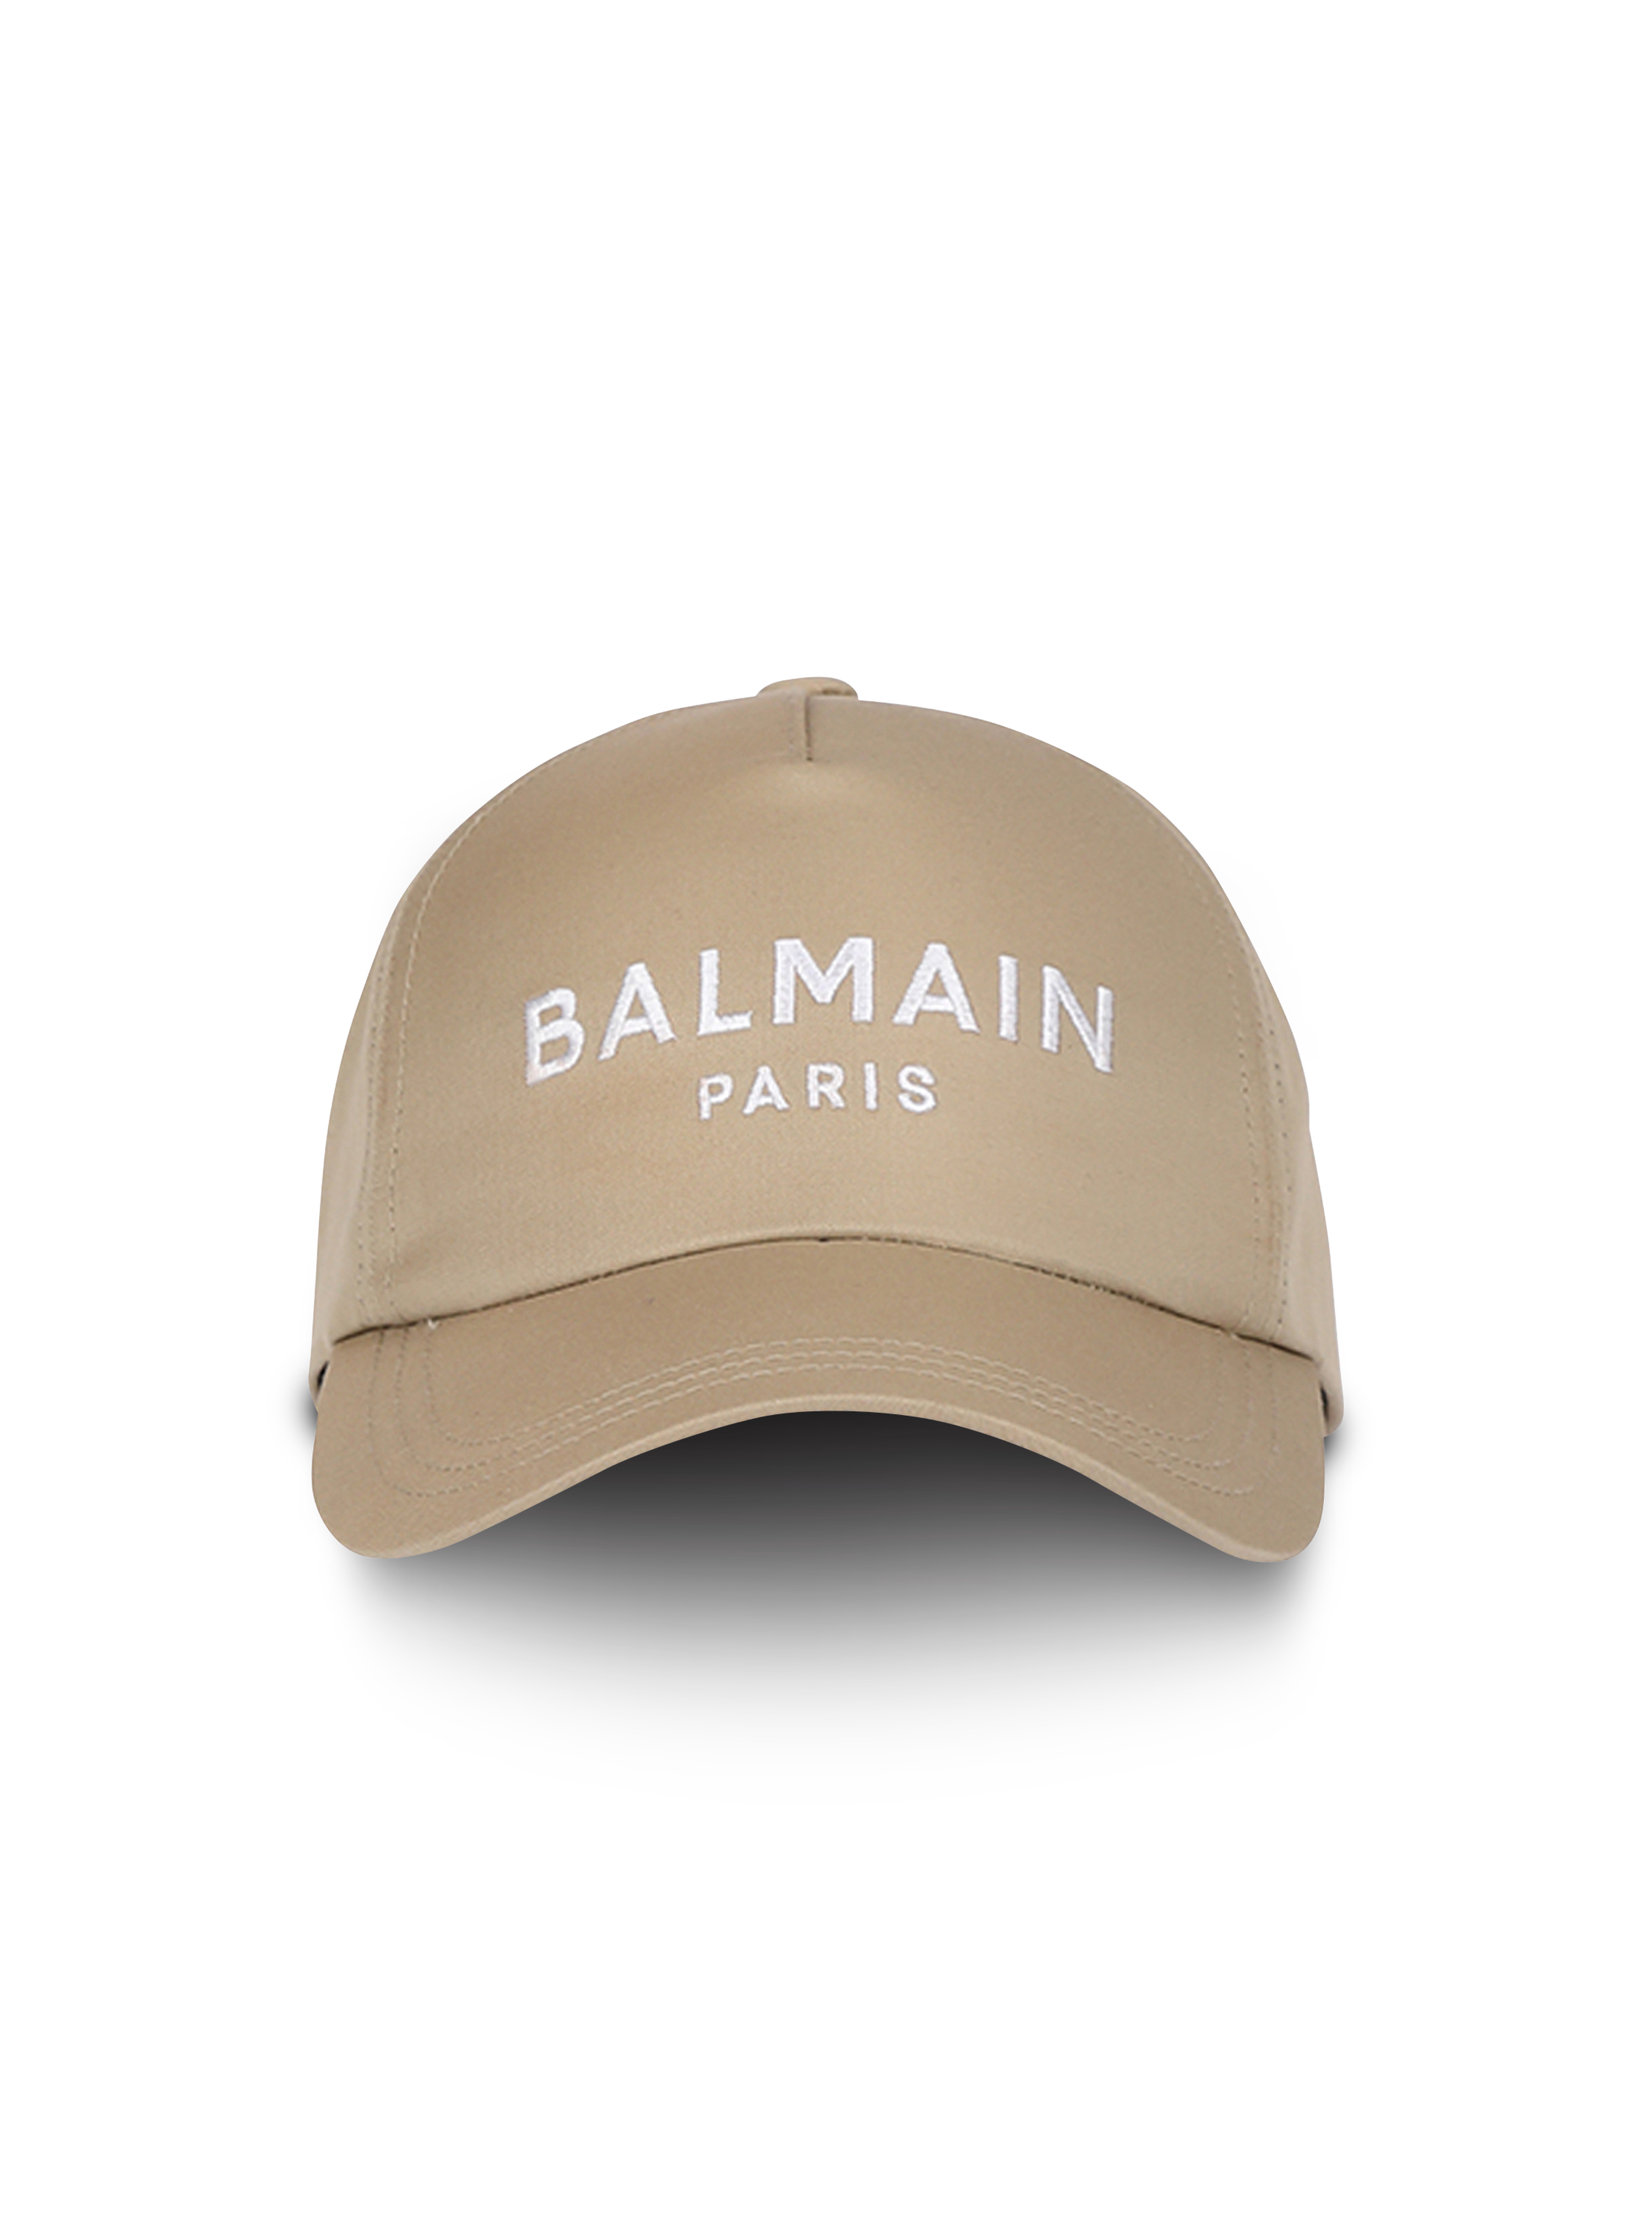 Cotton cap with Balmain Paris logo, beige